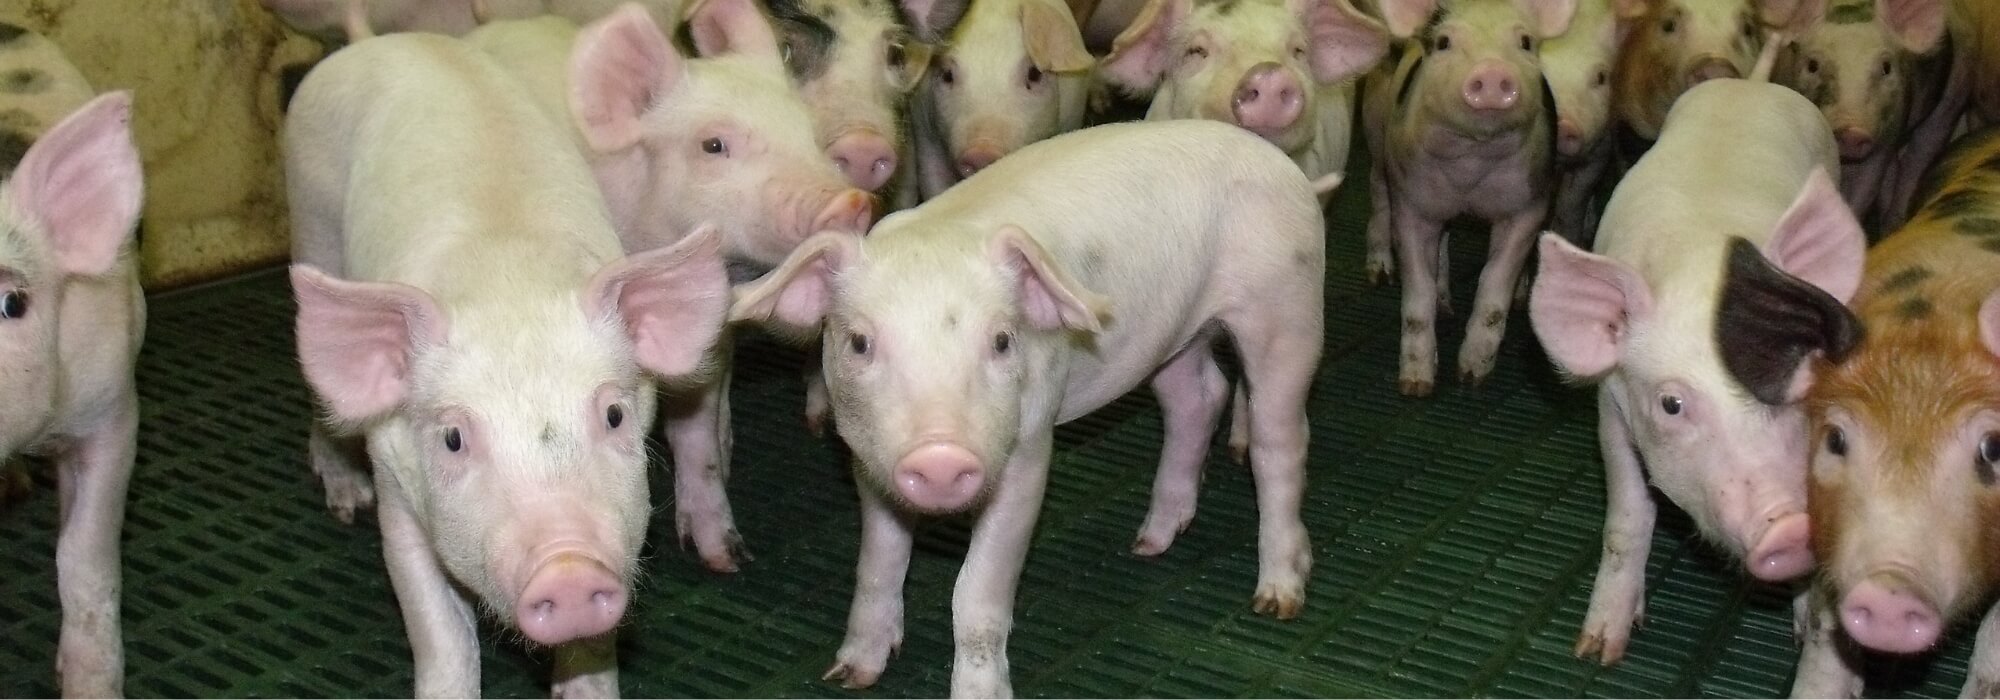 Lots of pigs crammed together on slats